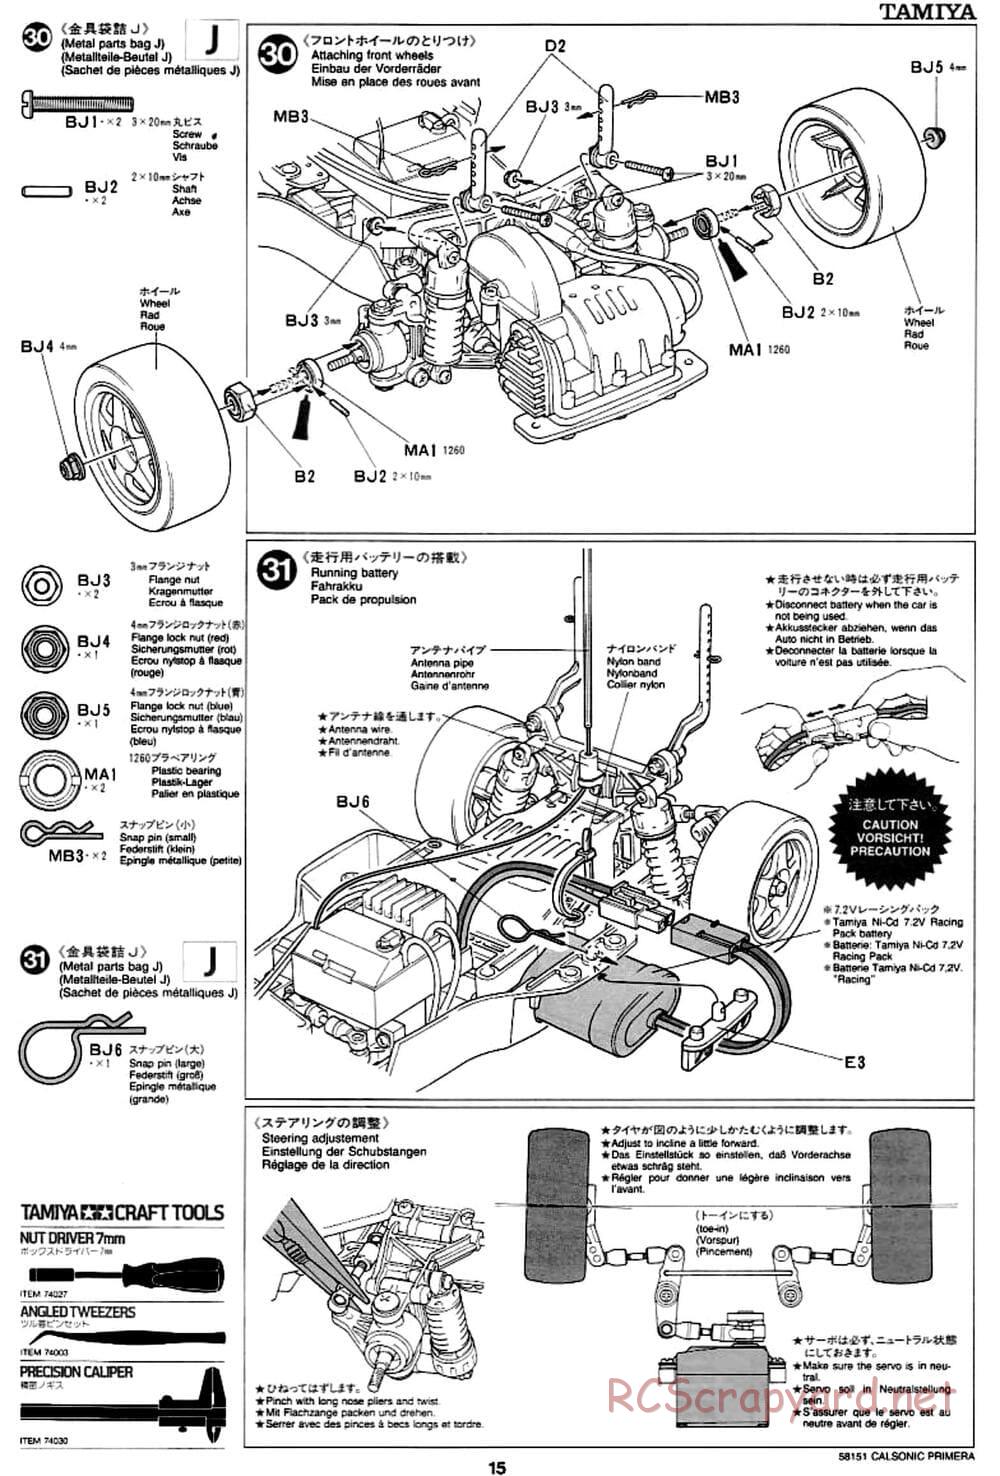 Tamiya - Calsonic Nissan Primera JTCC - FF-01 Chassis - Manual - Page 15